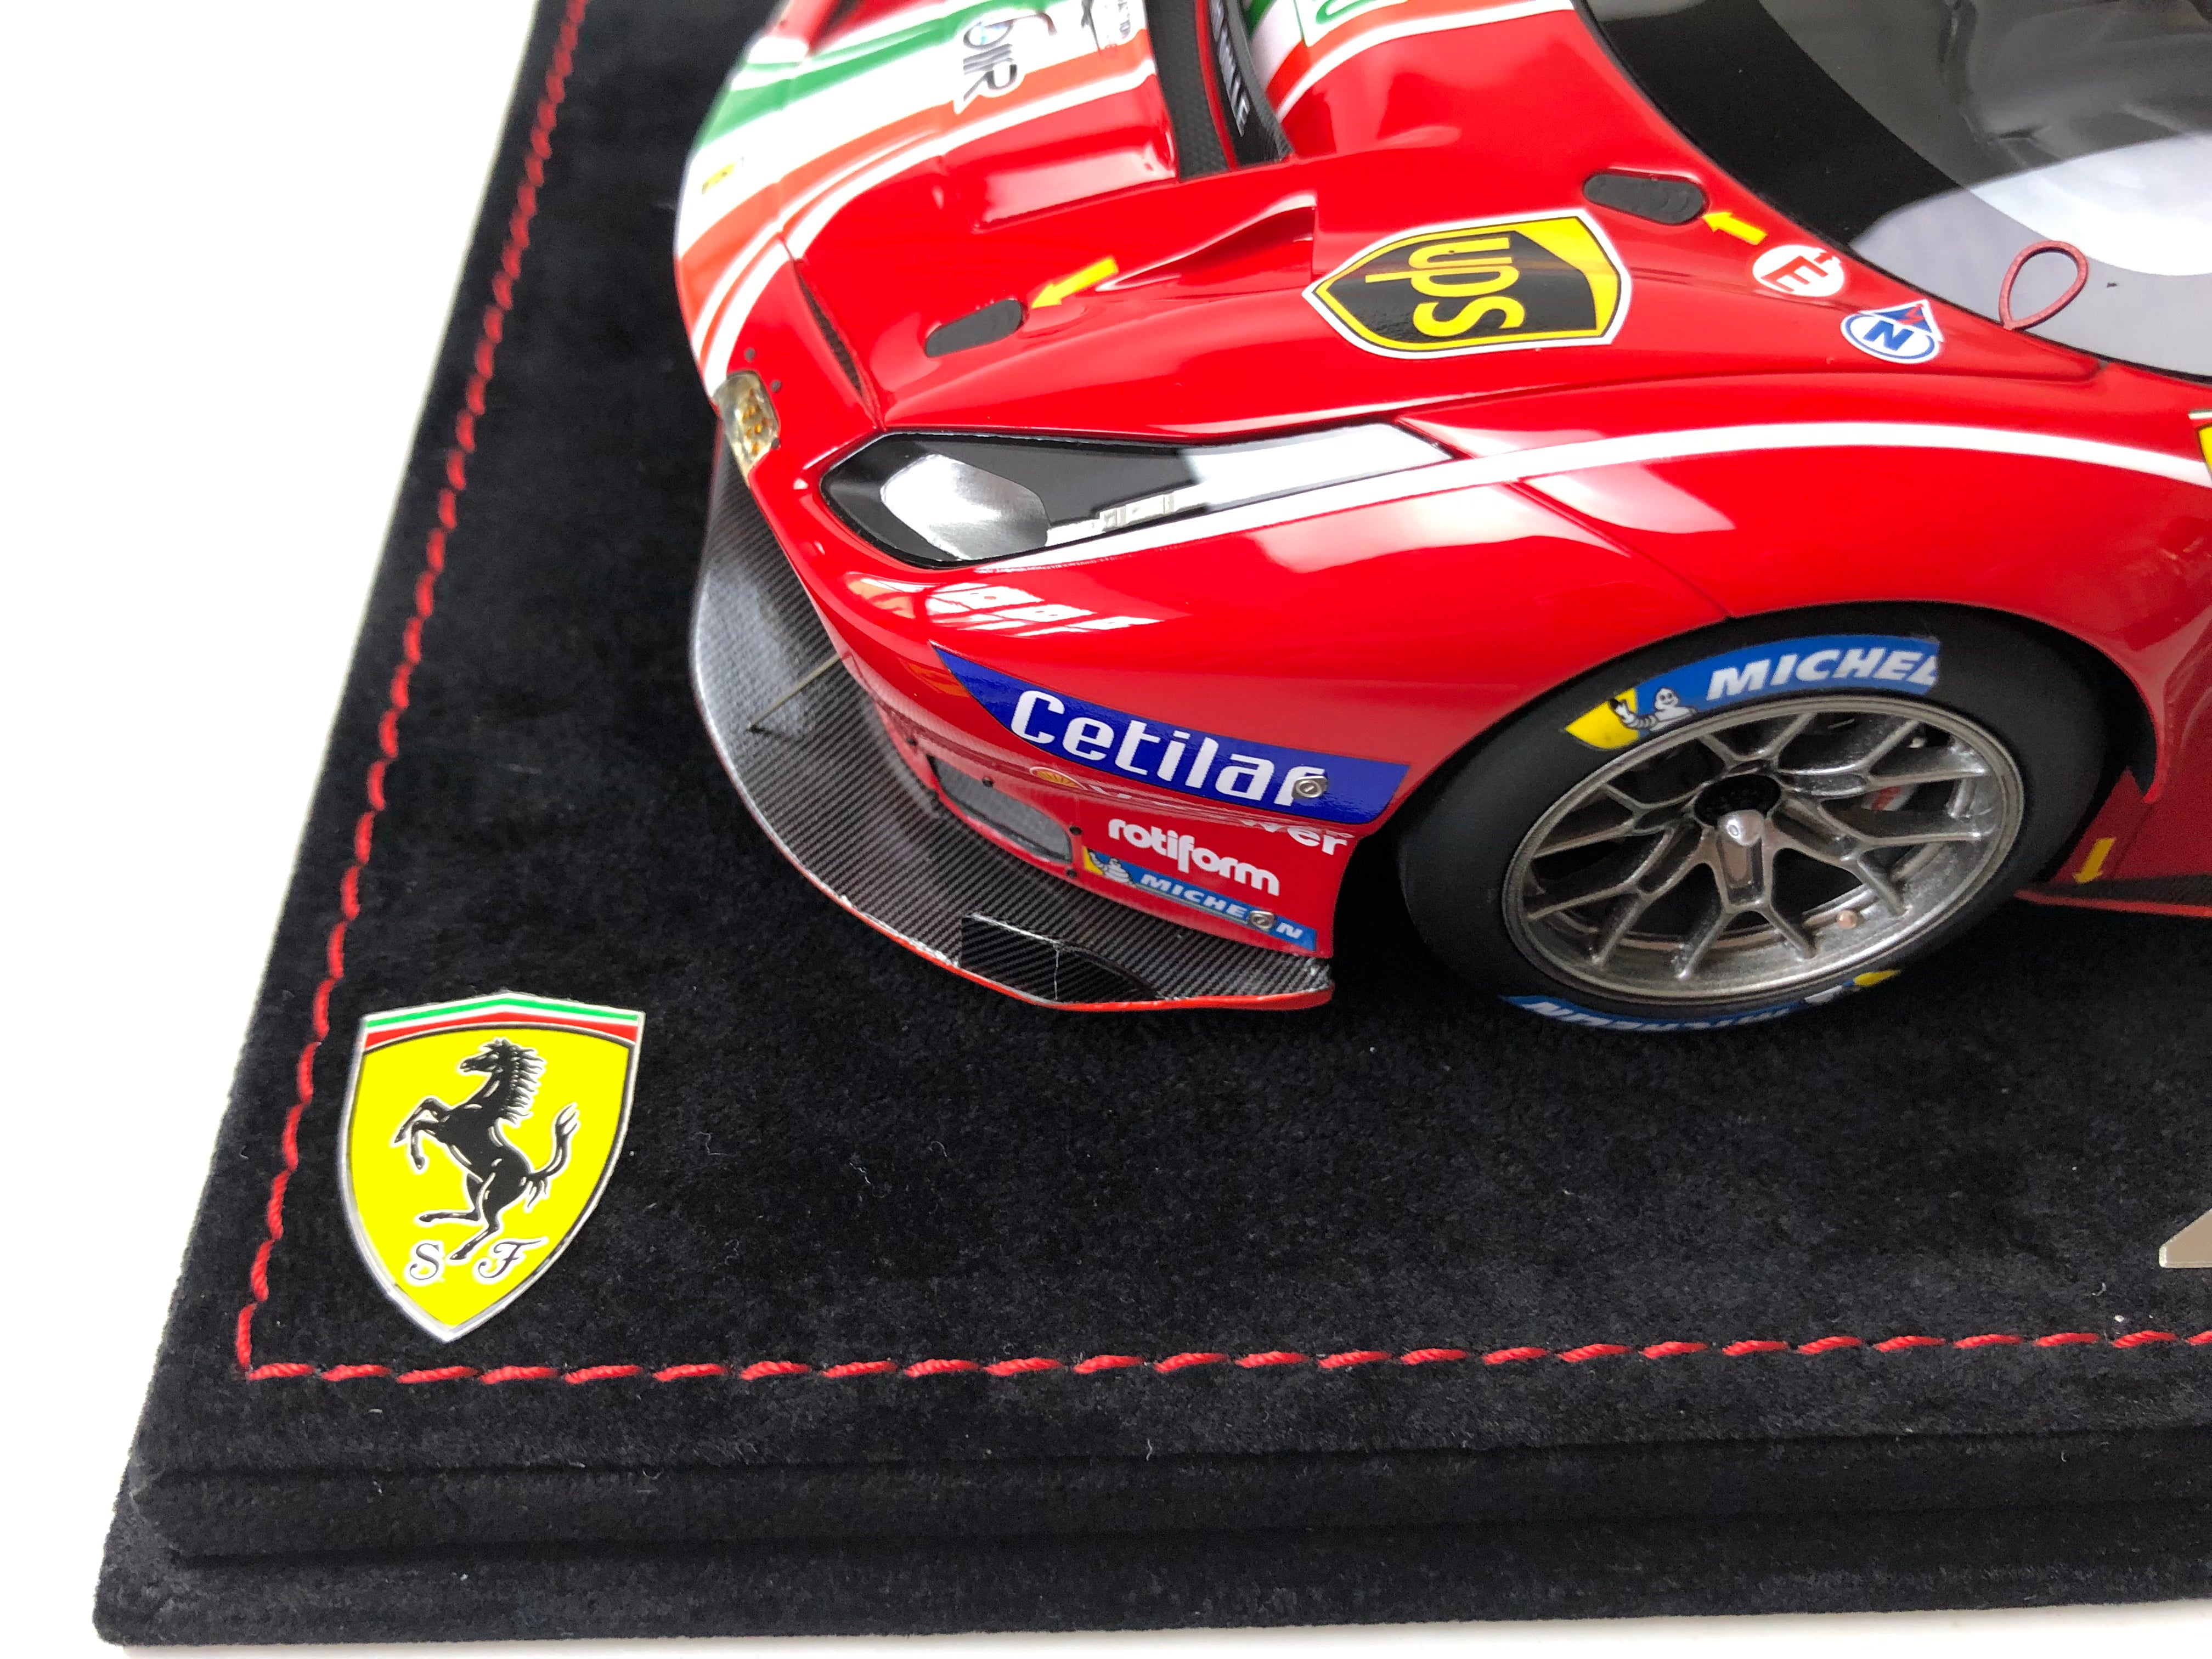 BBR 1:18 scale Ferrari 488 GTE Le Mans class winner #51